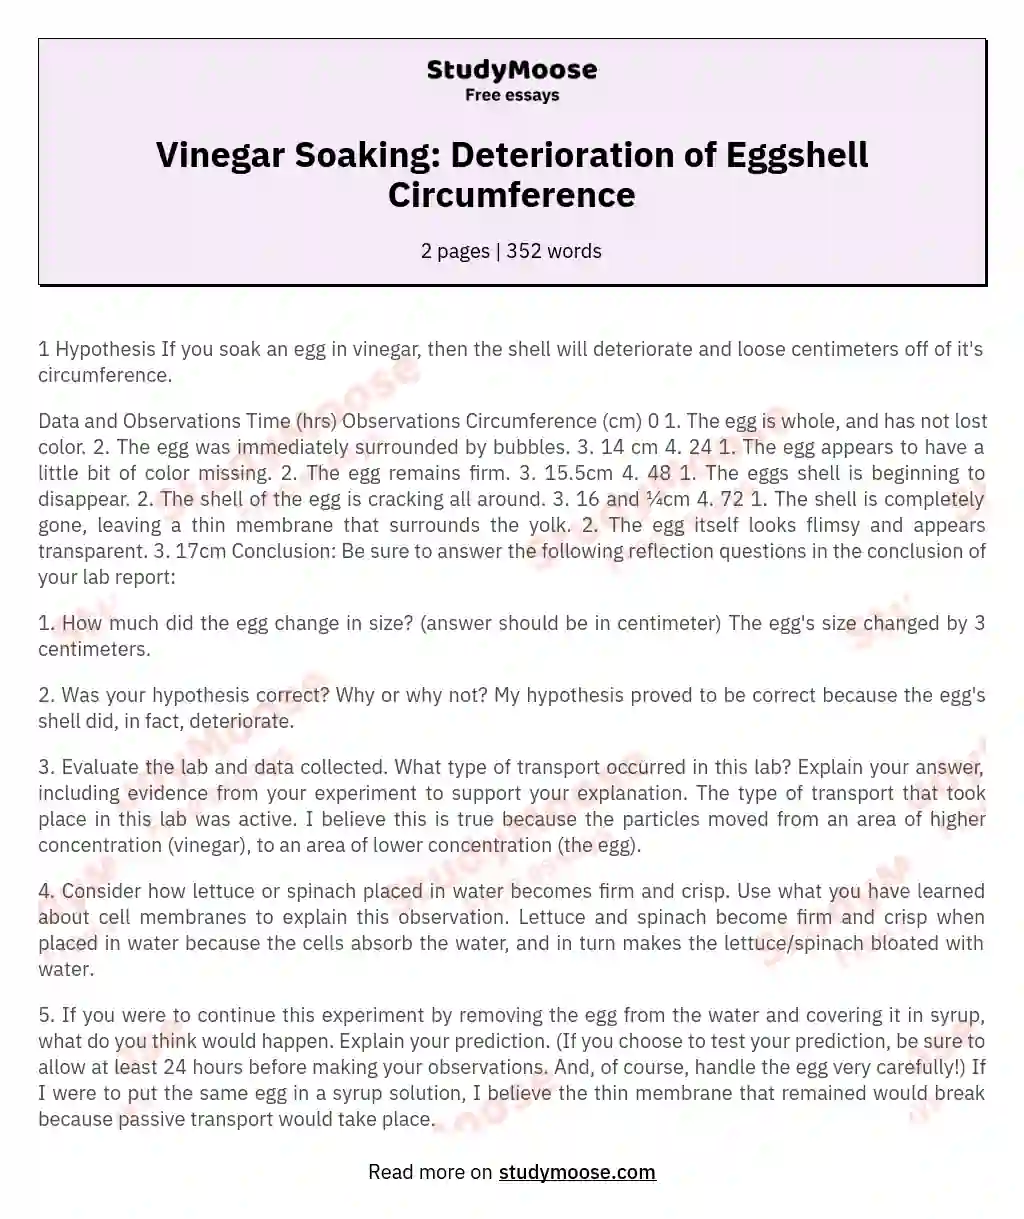 Vinegar Soaking: Deterioration of Eggshell Circumference essay